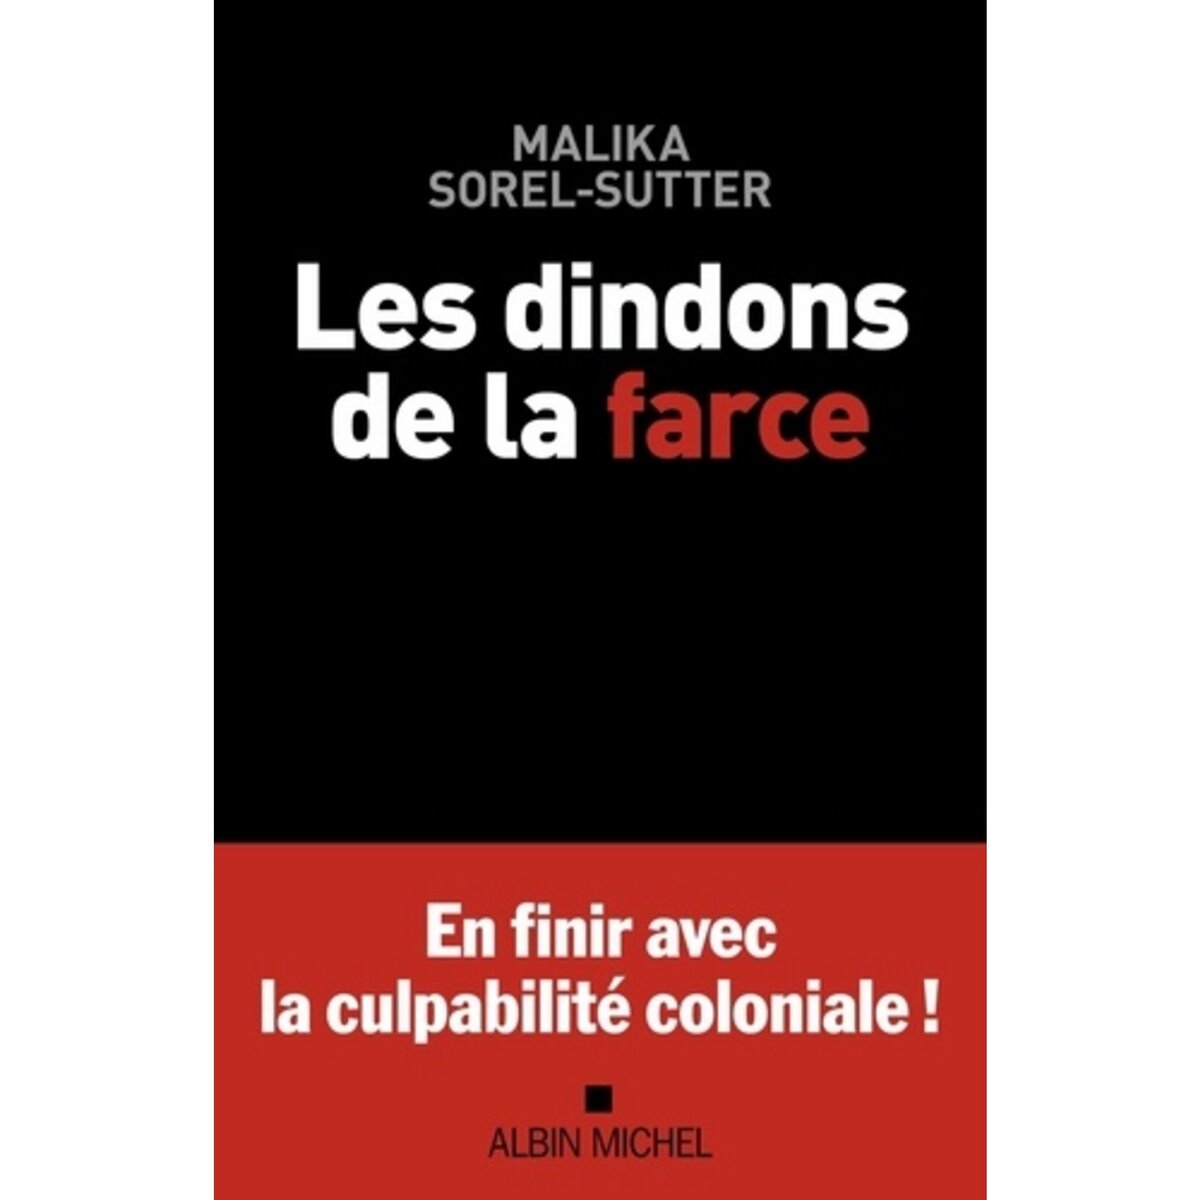  LES DINDONS DE LA FARCE, Sorel-Sutter Malika